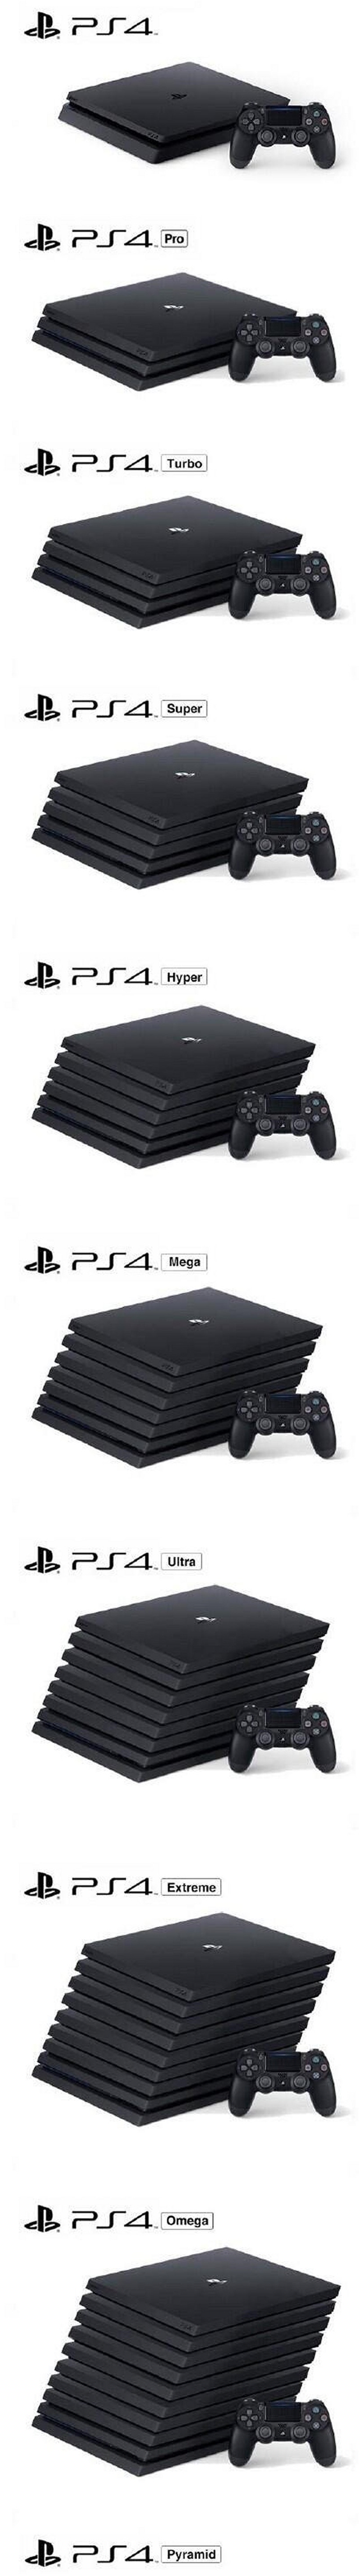 Evolcia PS4  